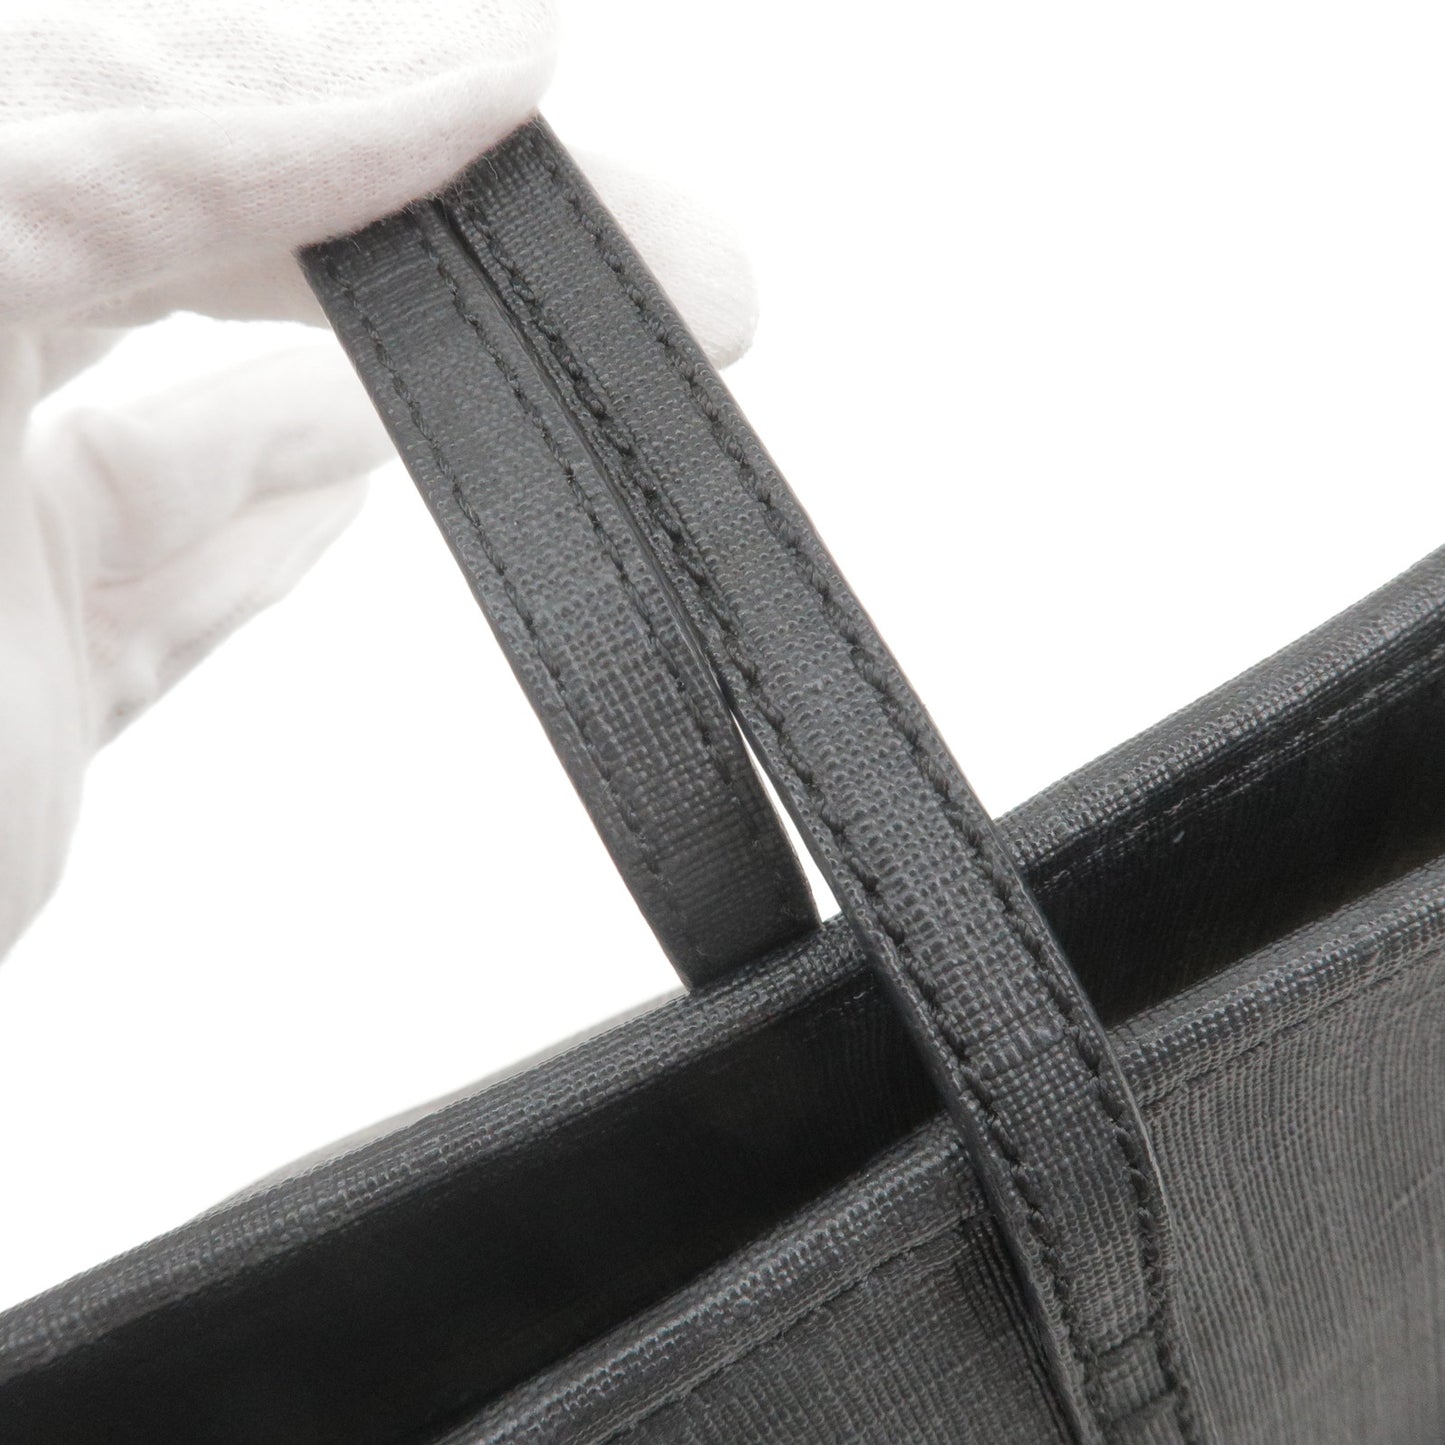 FENDI Zucca Logo Print PVC Tote Bag Hand Bag Black 8BH198